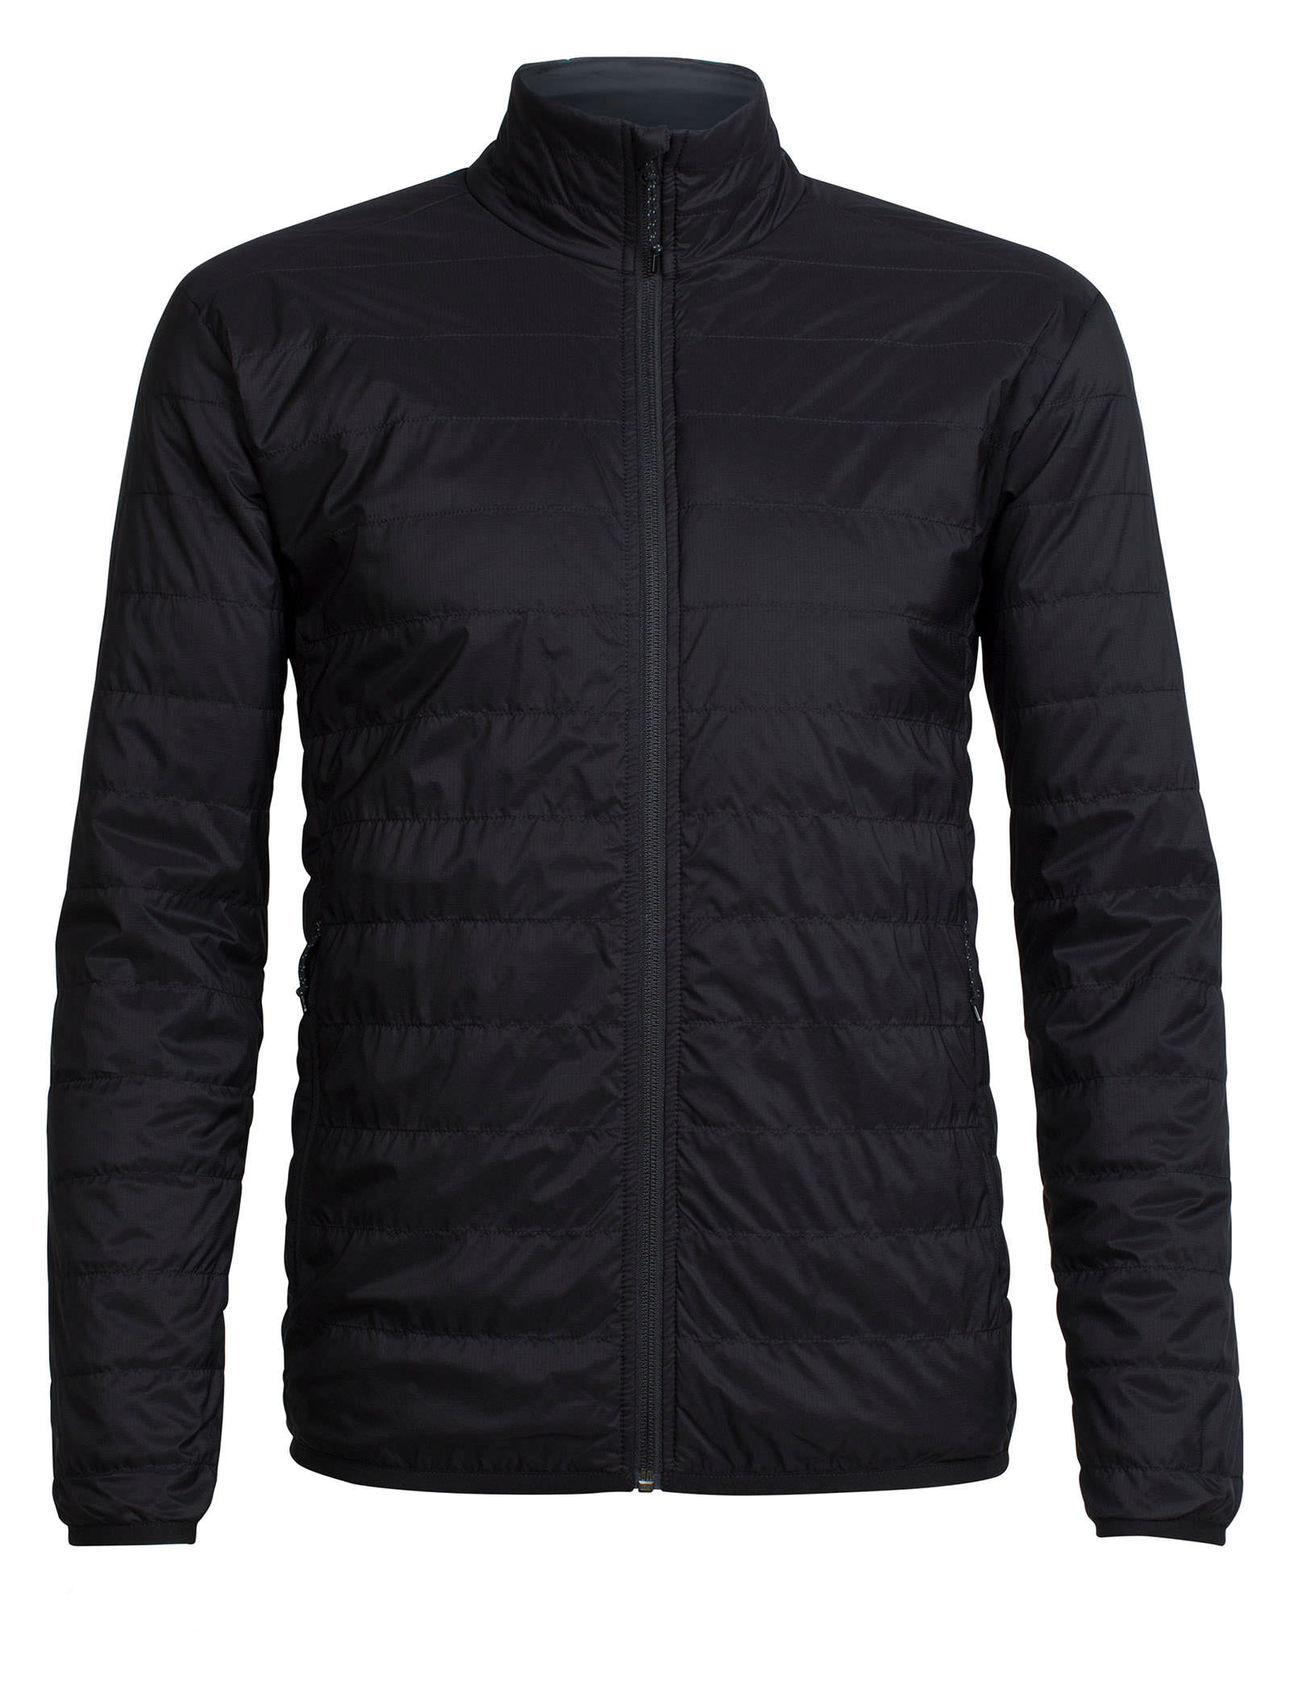 Icebreaker Hyperia Lite Jacket - Insulated jacket - Men's